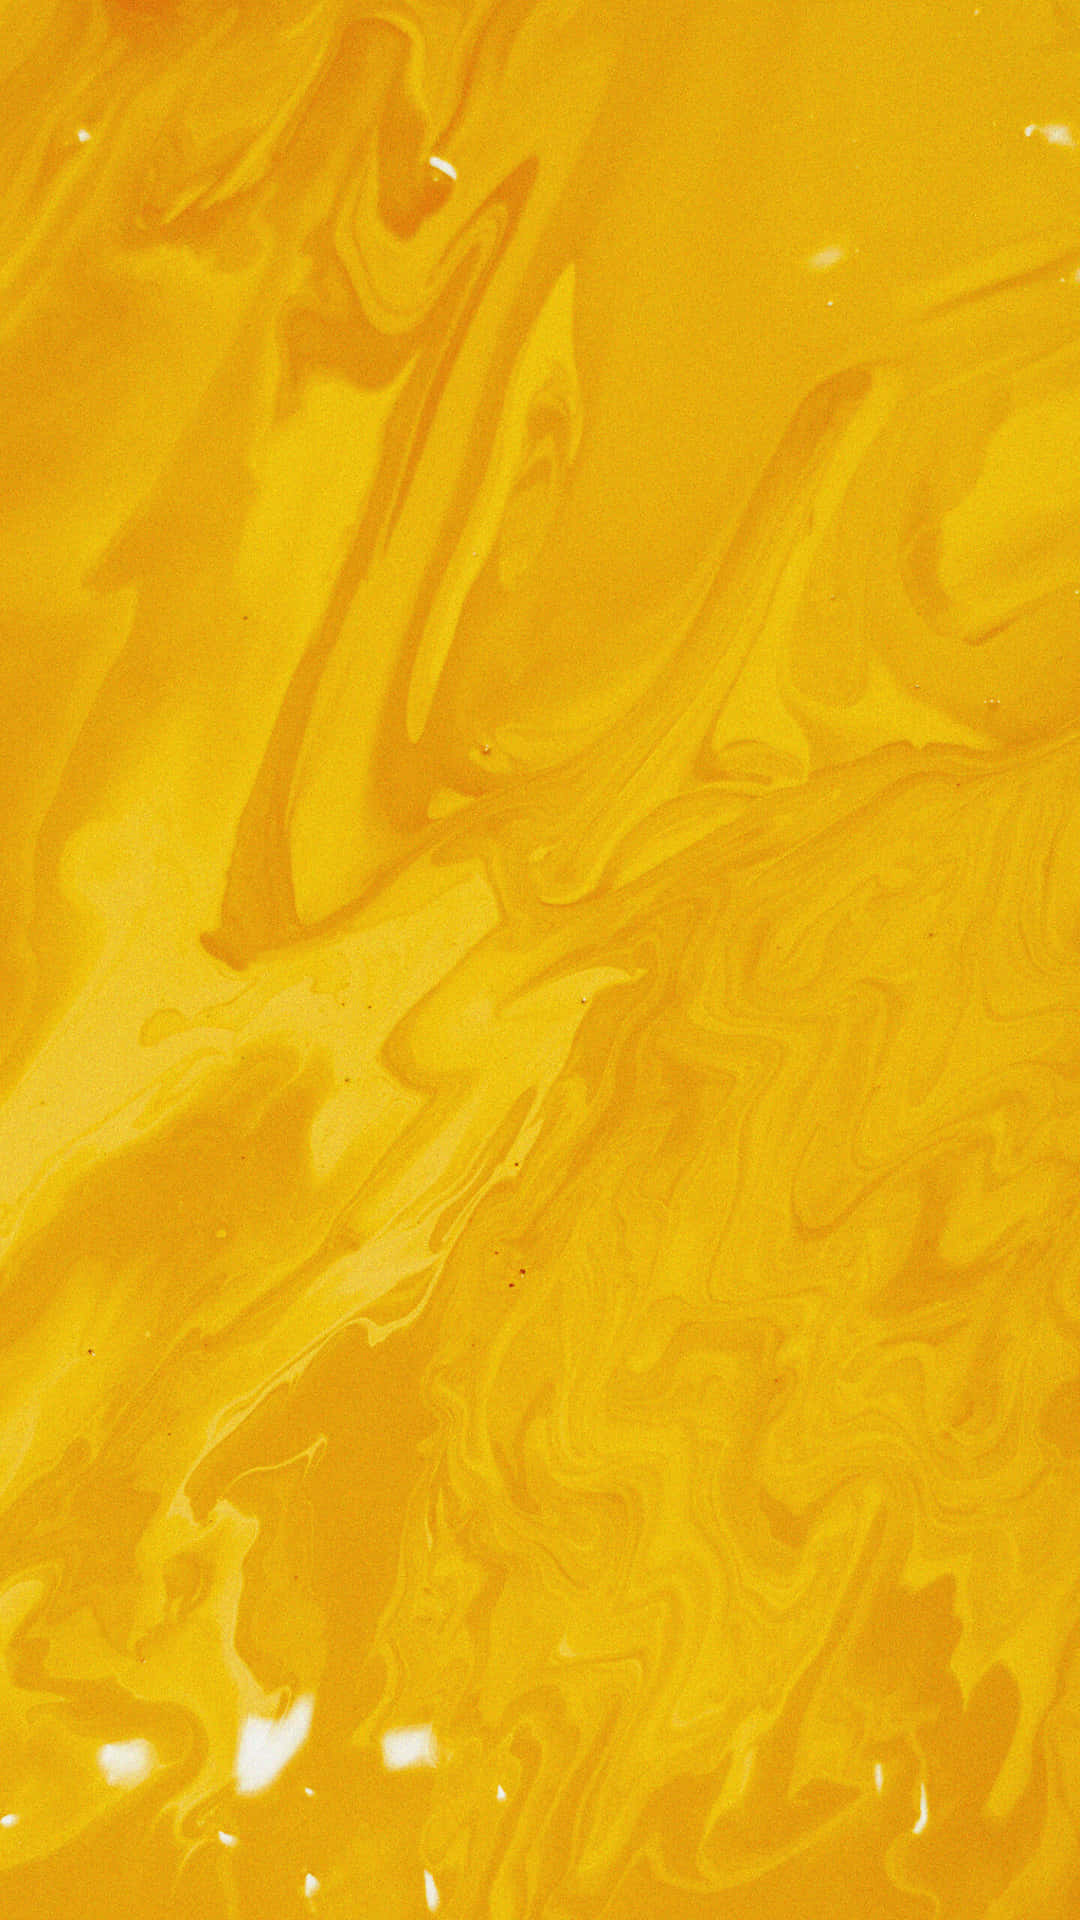 A Yellow Liquid Background